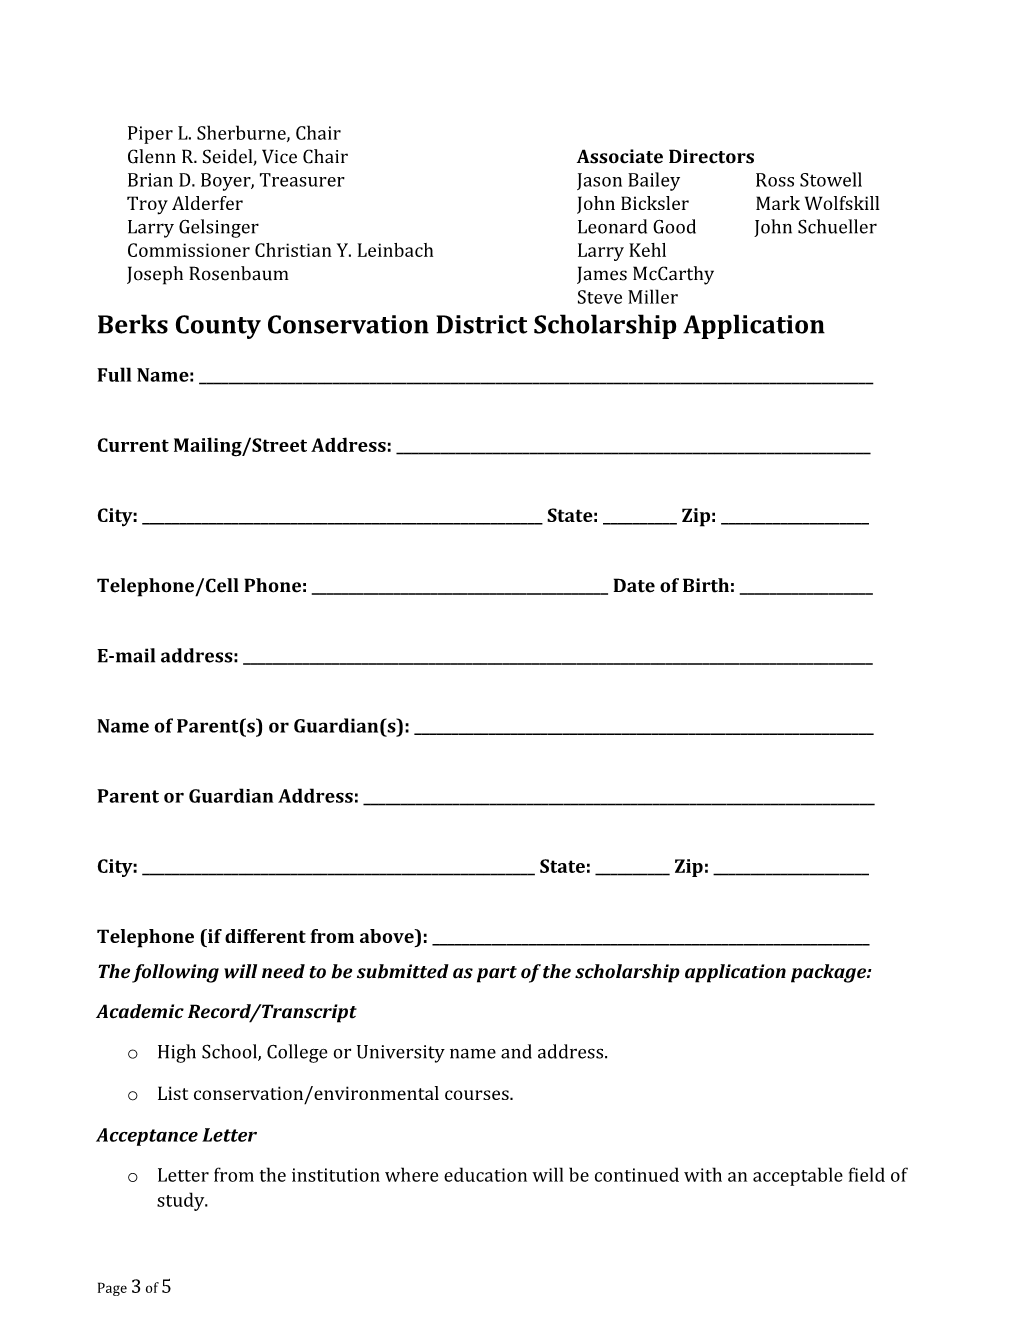 Berks County Conservation District Scholarship Program